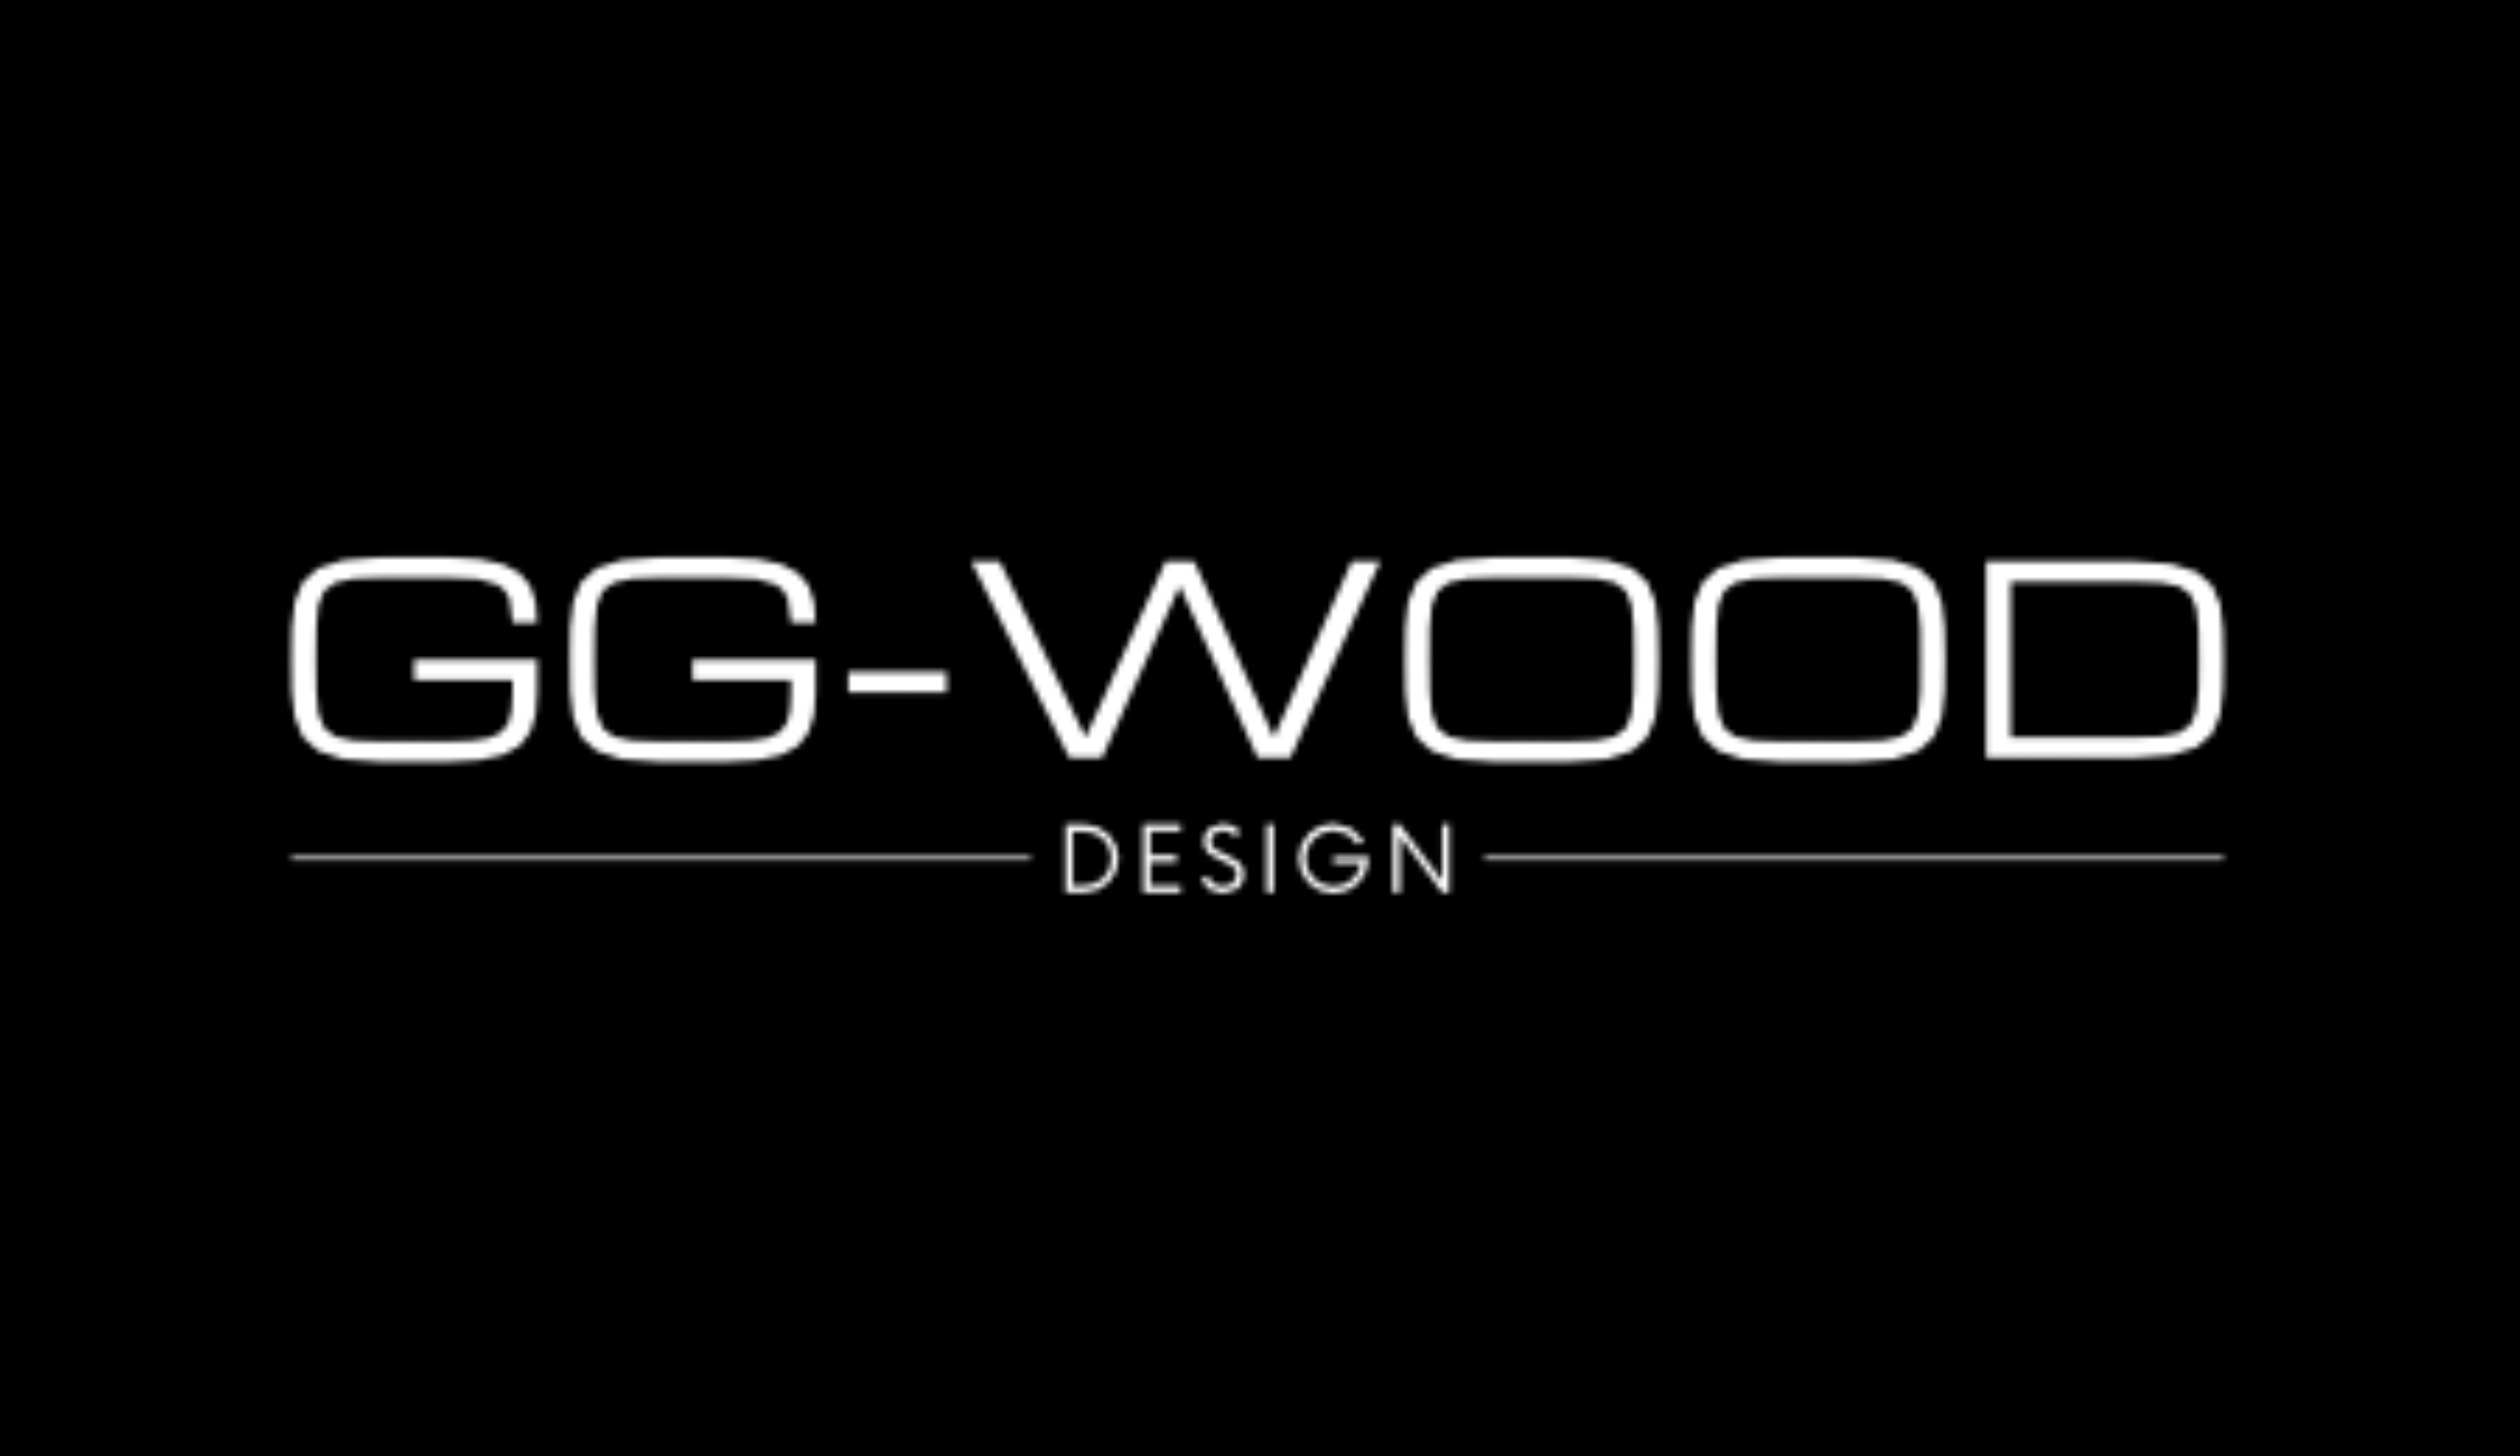 GG-WOOD design